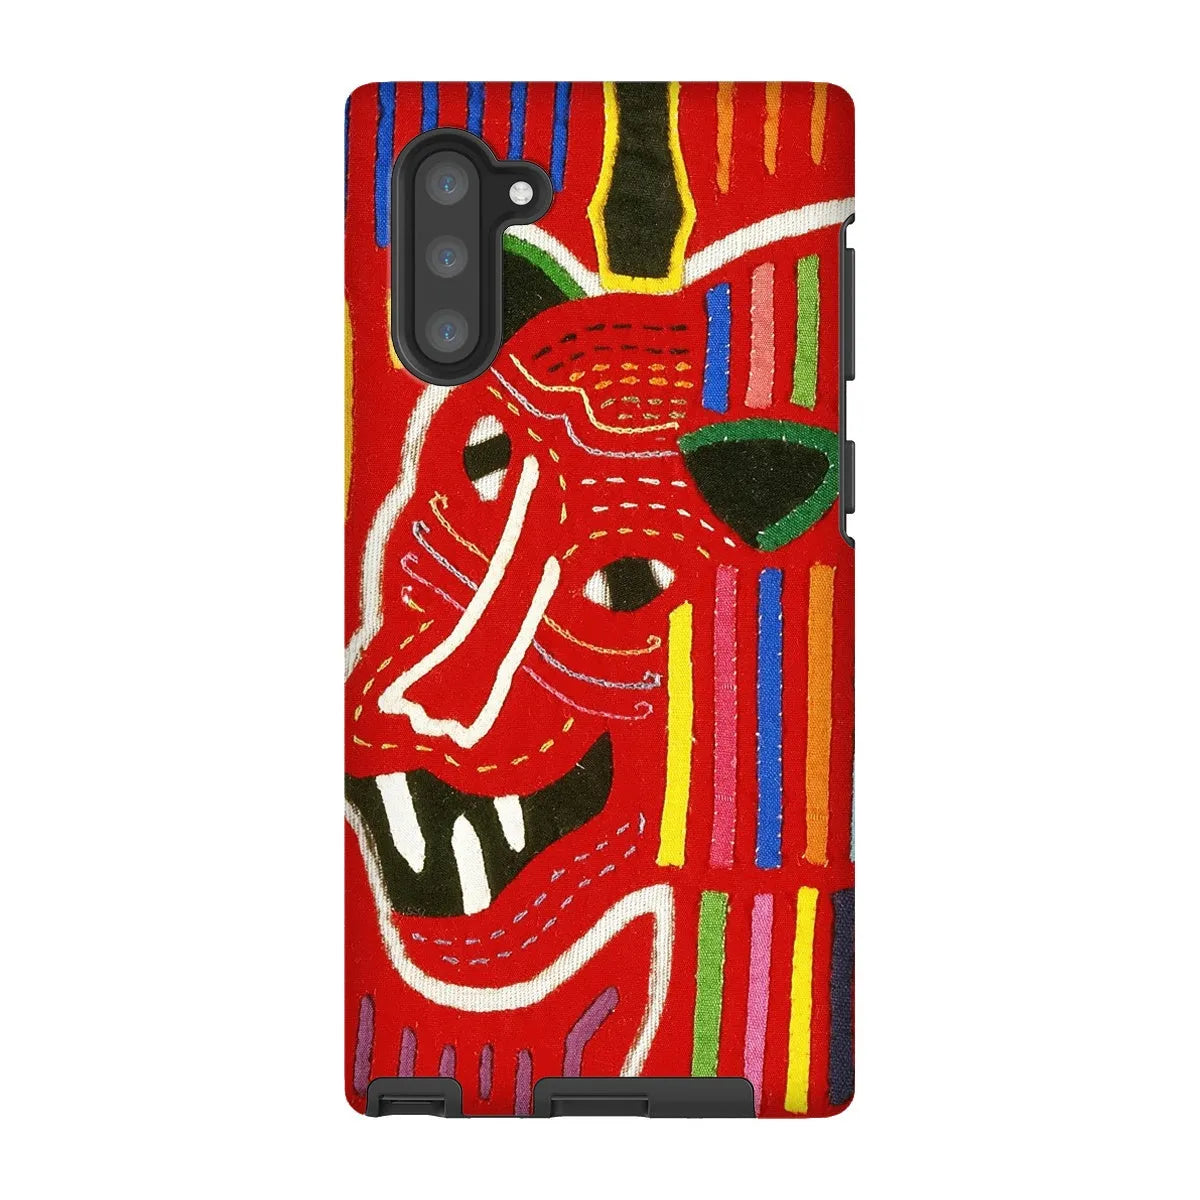 Roaring Tiger - Mola Needlework Art Phone Case - Samsung Galaxy Note 10 / Matte - Mobile Phone Cases - Aesthetic Art